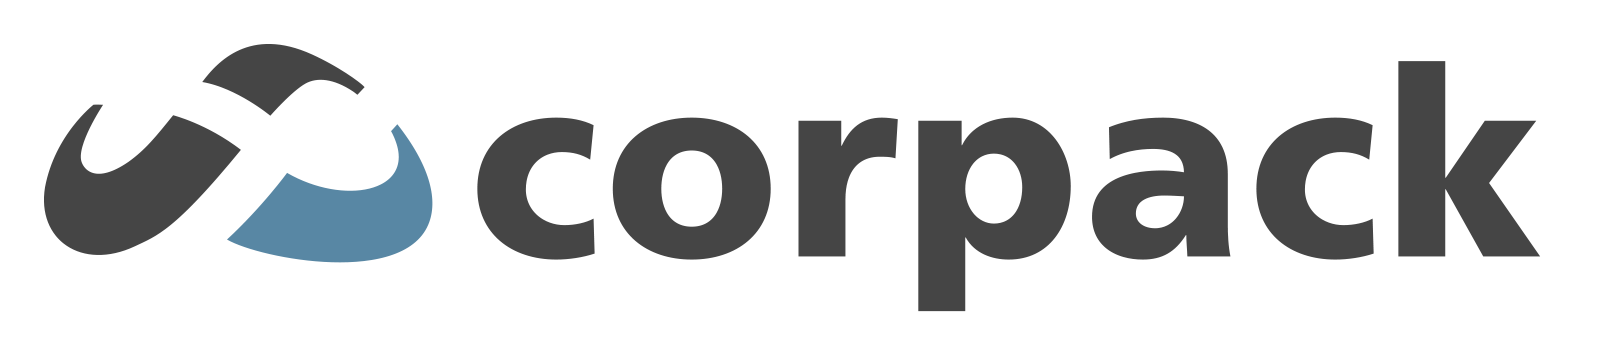 Corpack GmbH